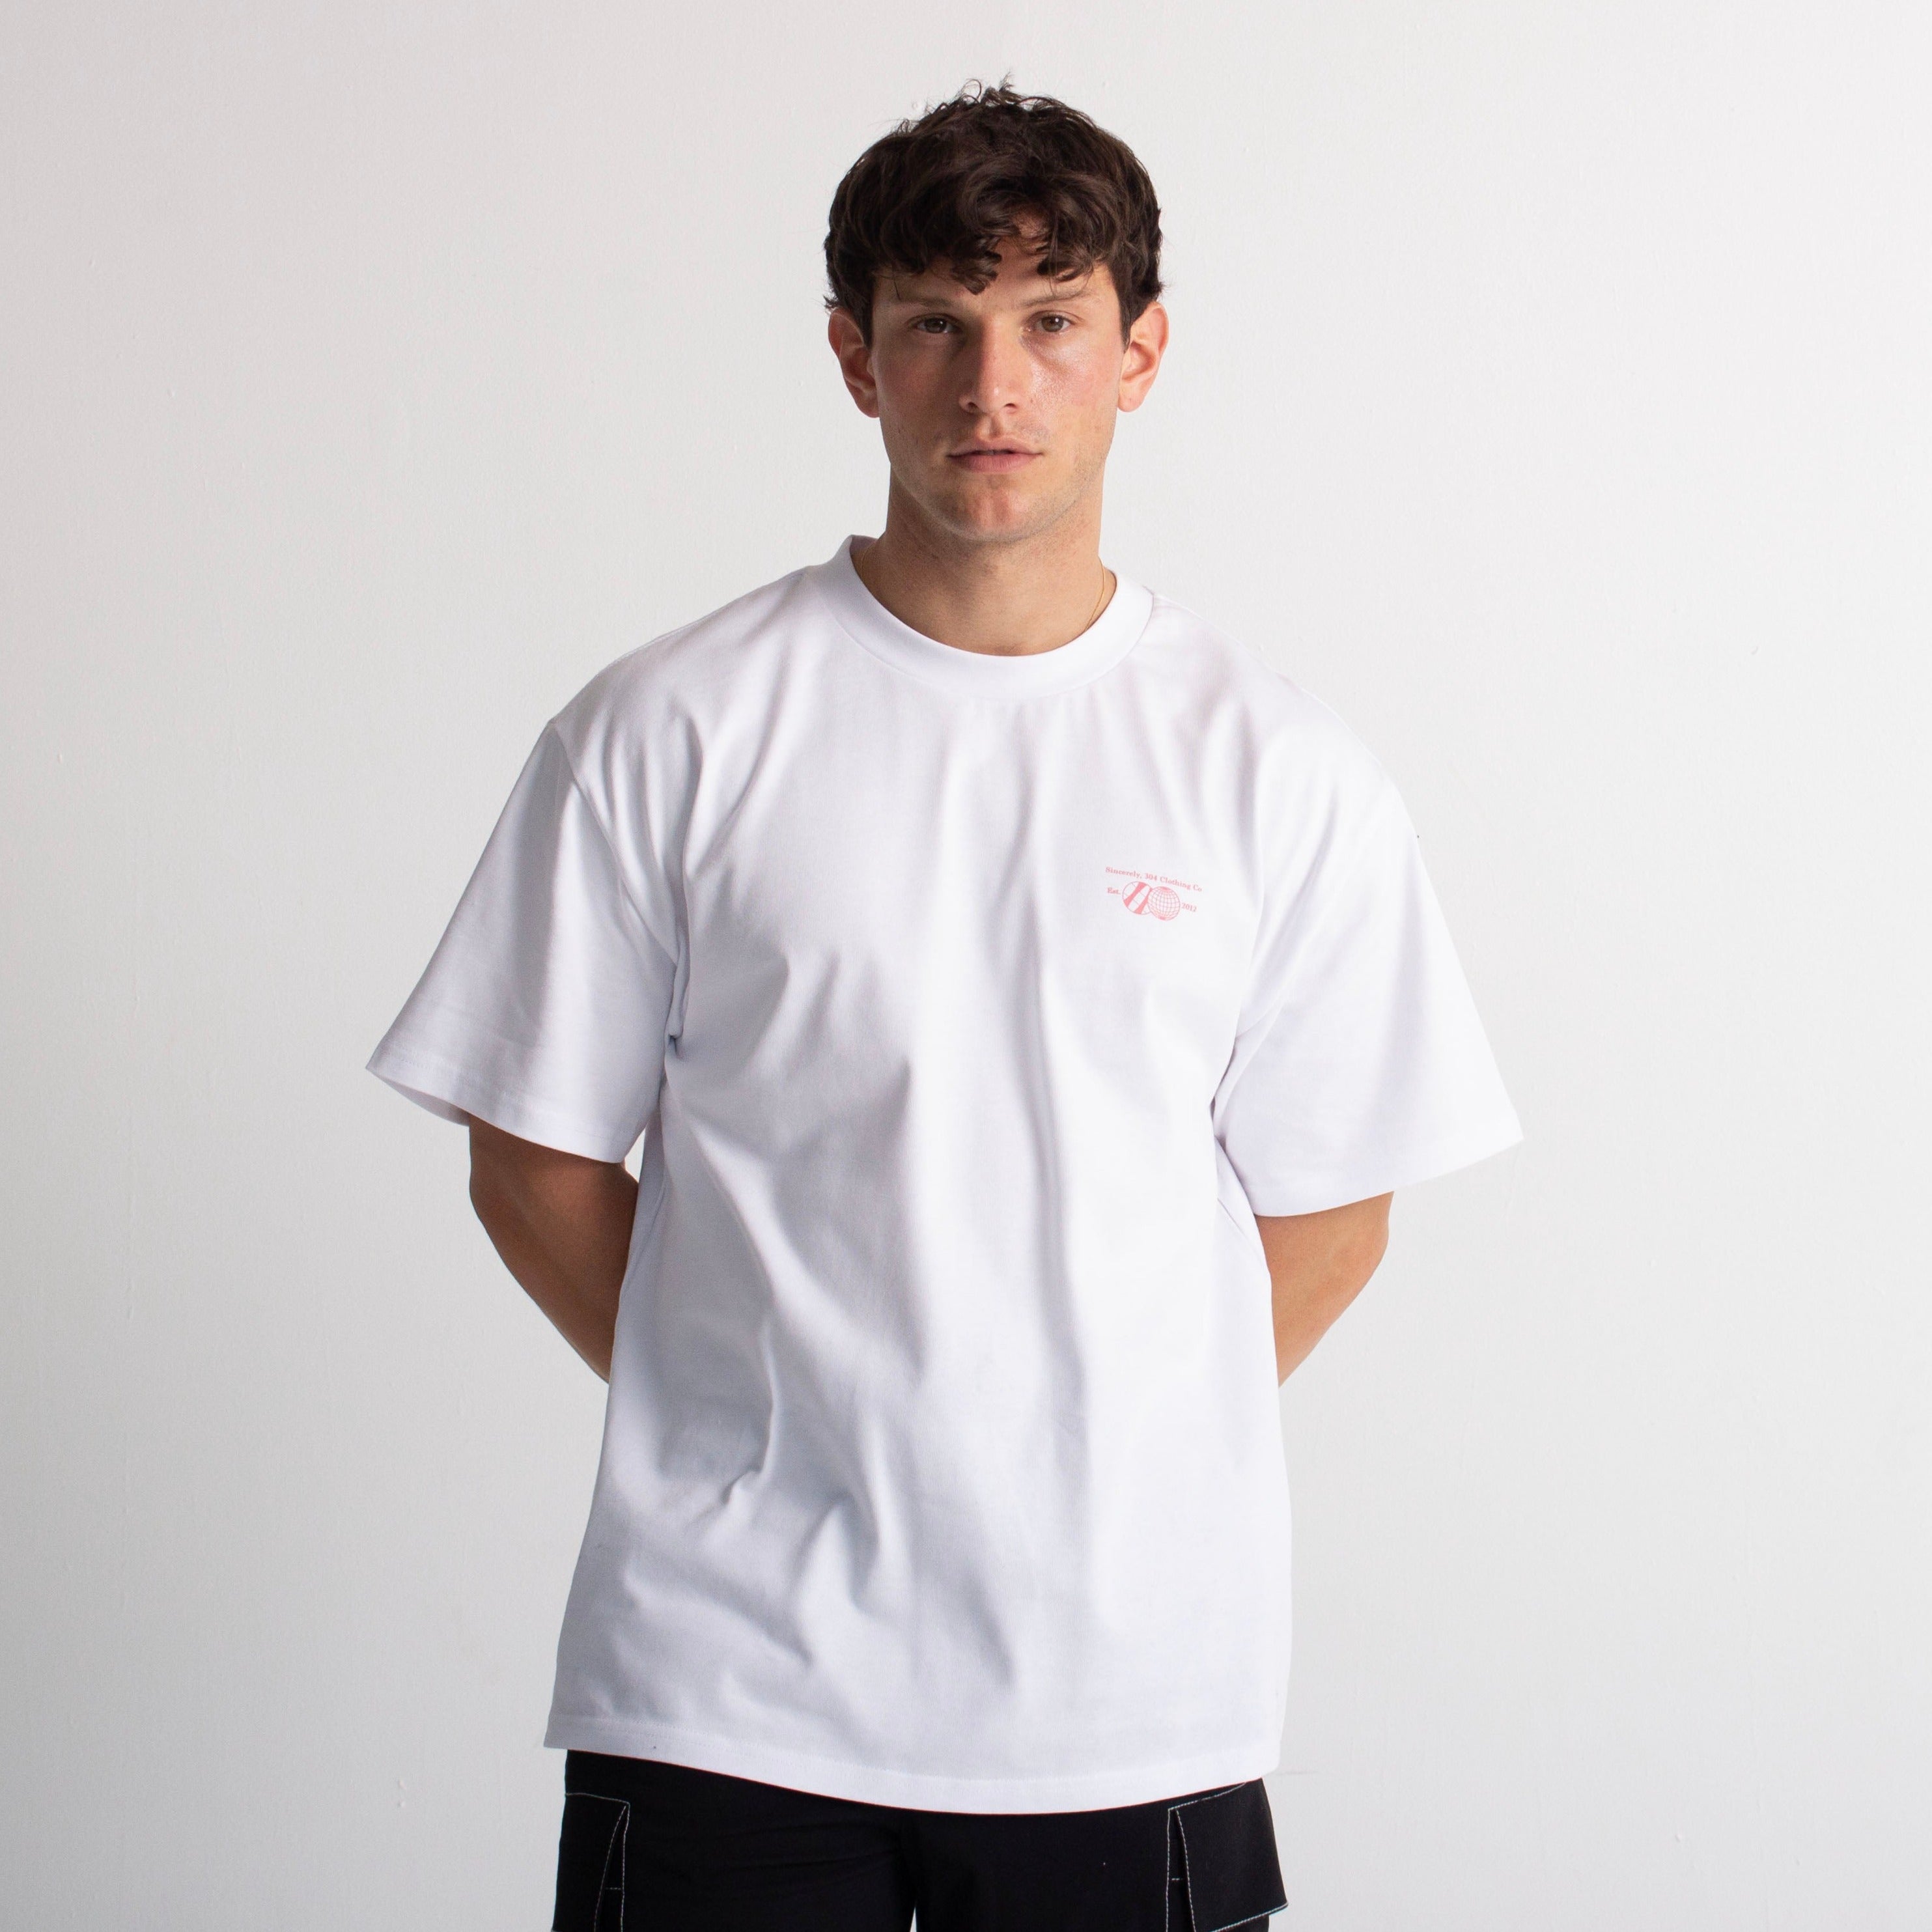 304 Mens Urban Skateboard T-shirt White